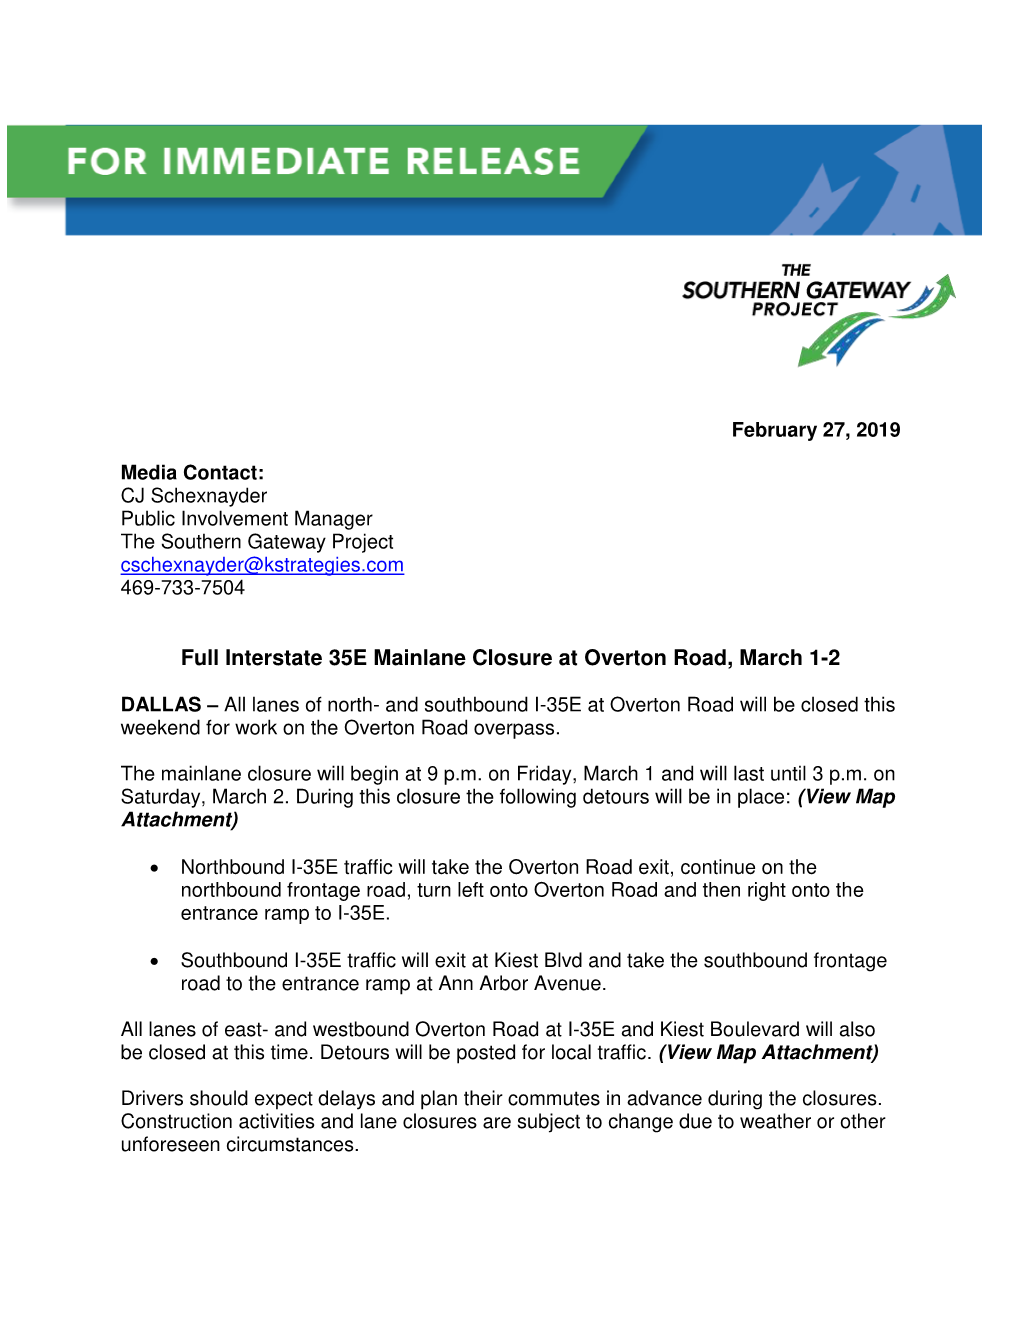 Full Interstate 35E Mainlane Closure at Overton Road, March 1-2